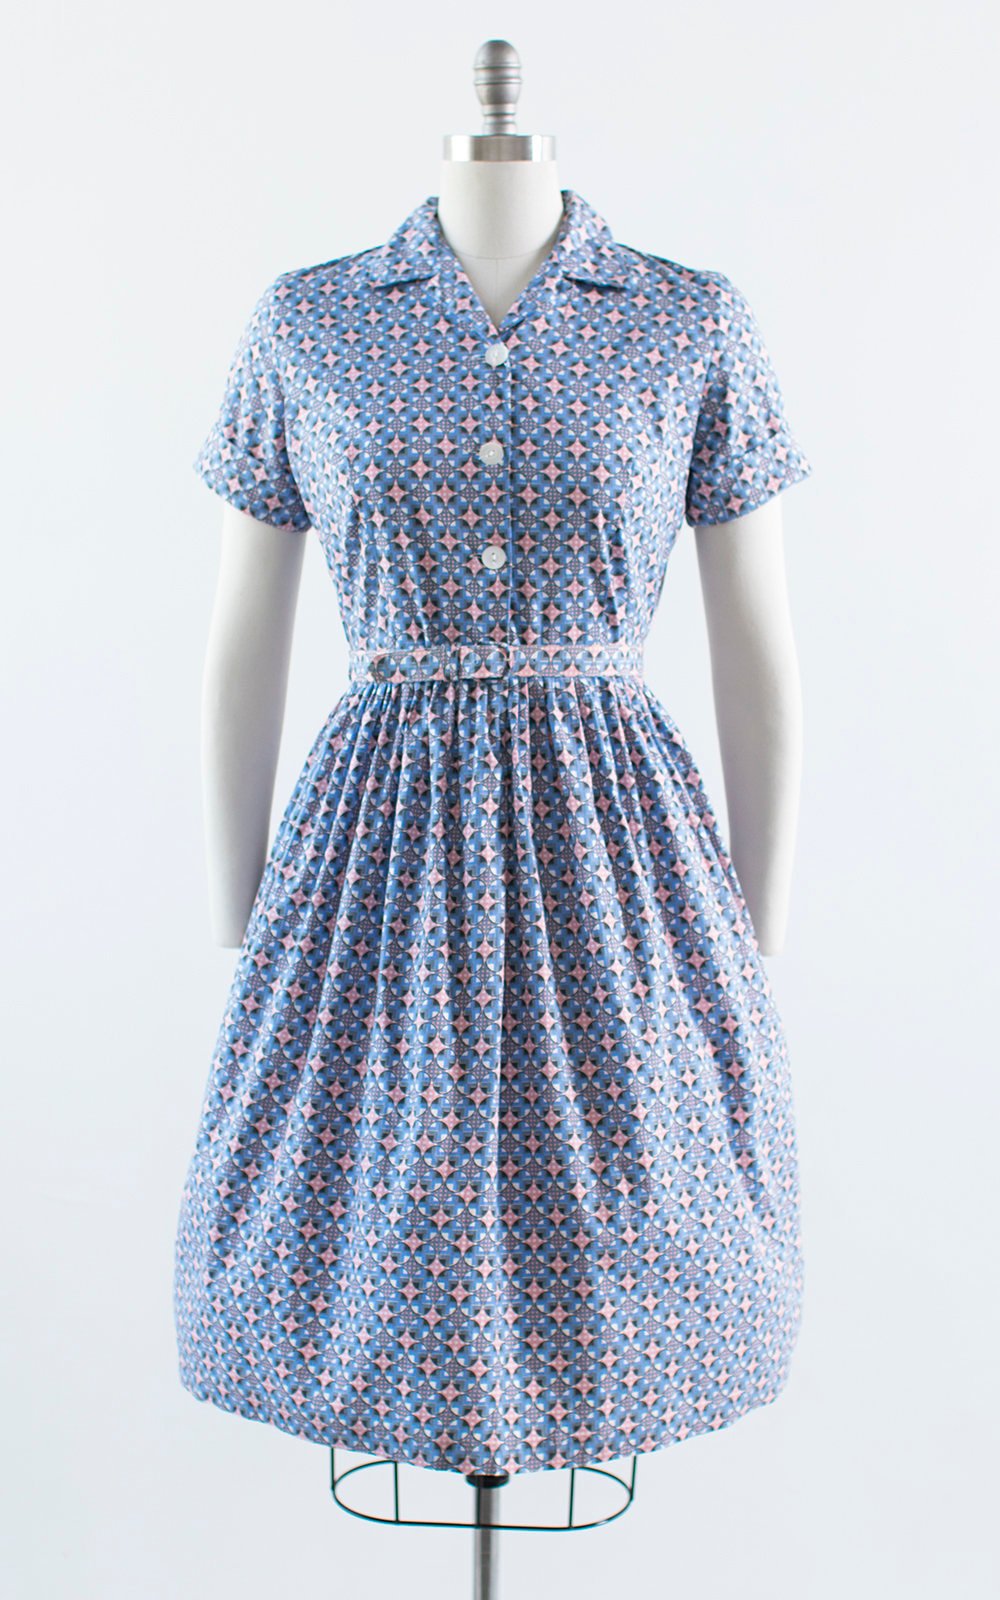 Vintage 1950s Dress | 50s Geometric Polka Dot Cotton Shirt Dress Blue Pink Shirtwaist Day Dress (medium)